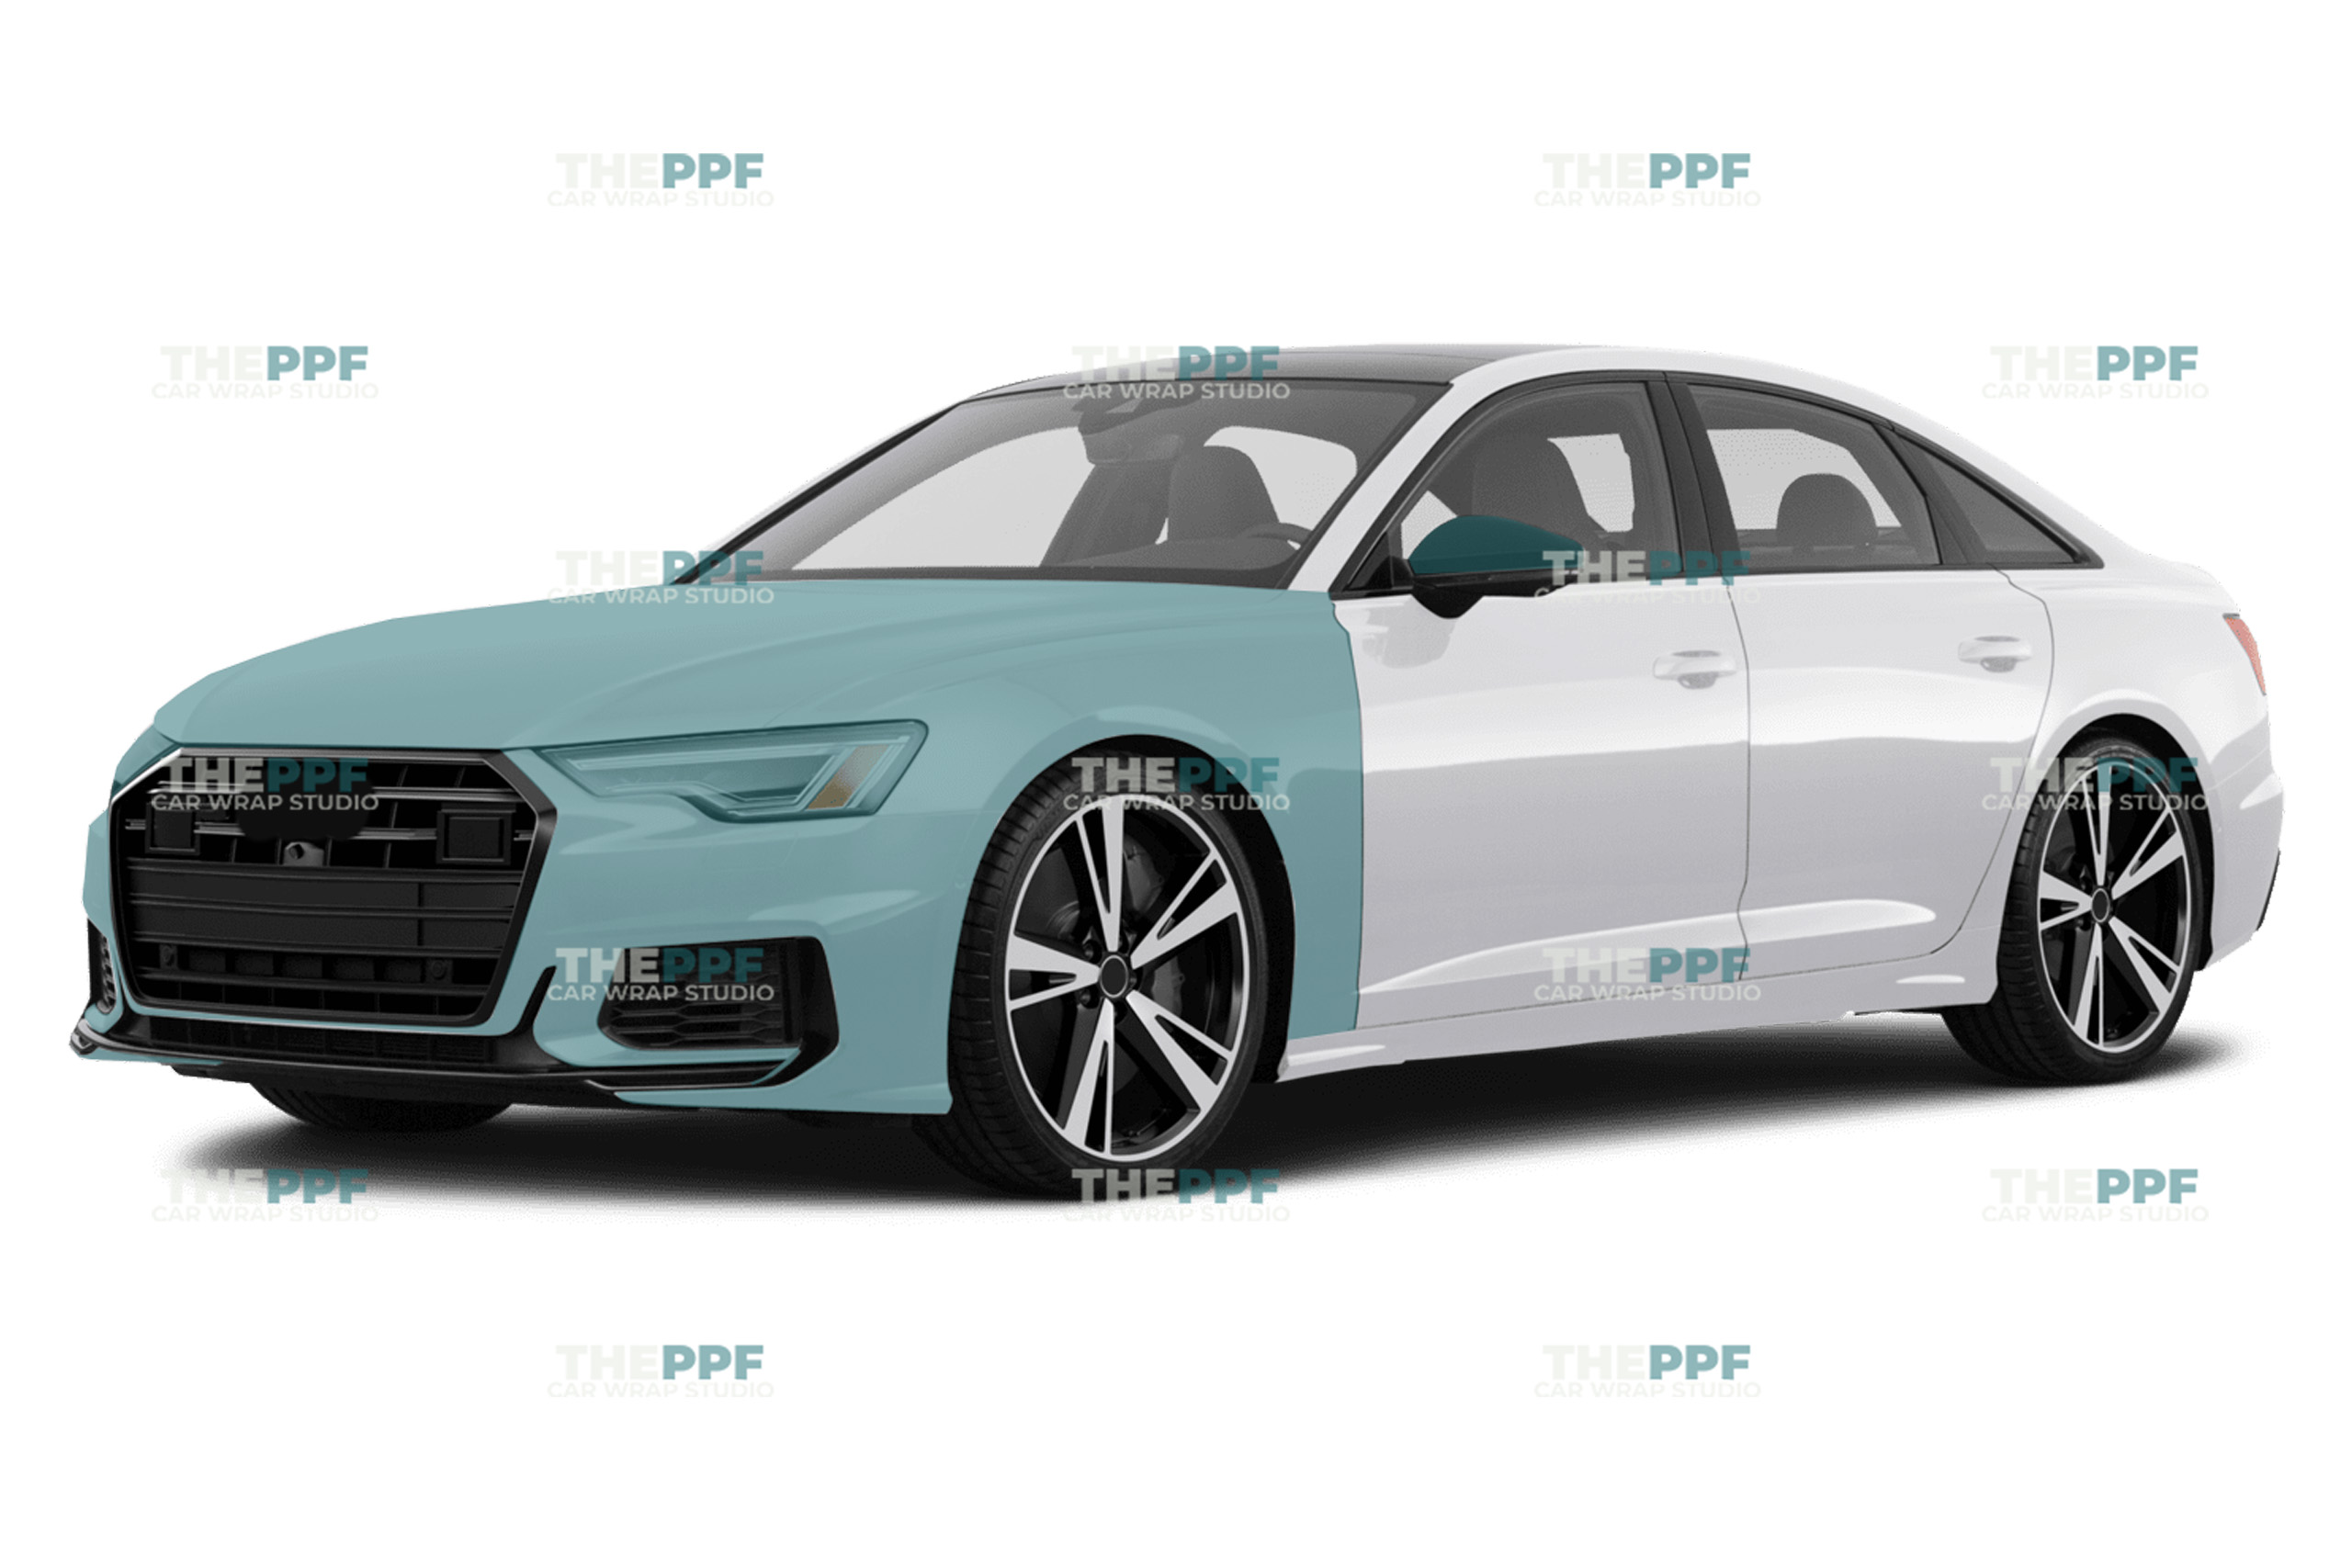 the ppf Audi paint protection auckland